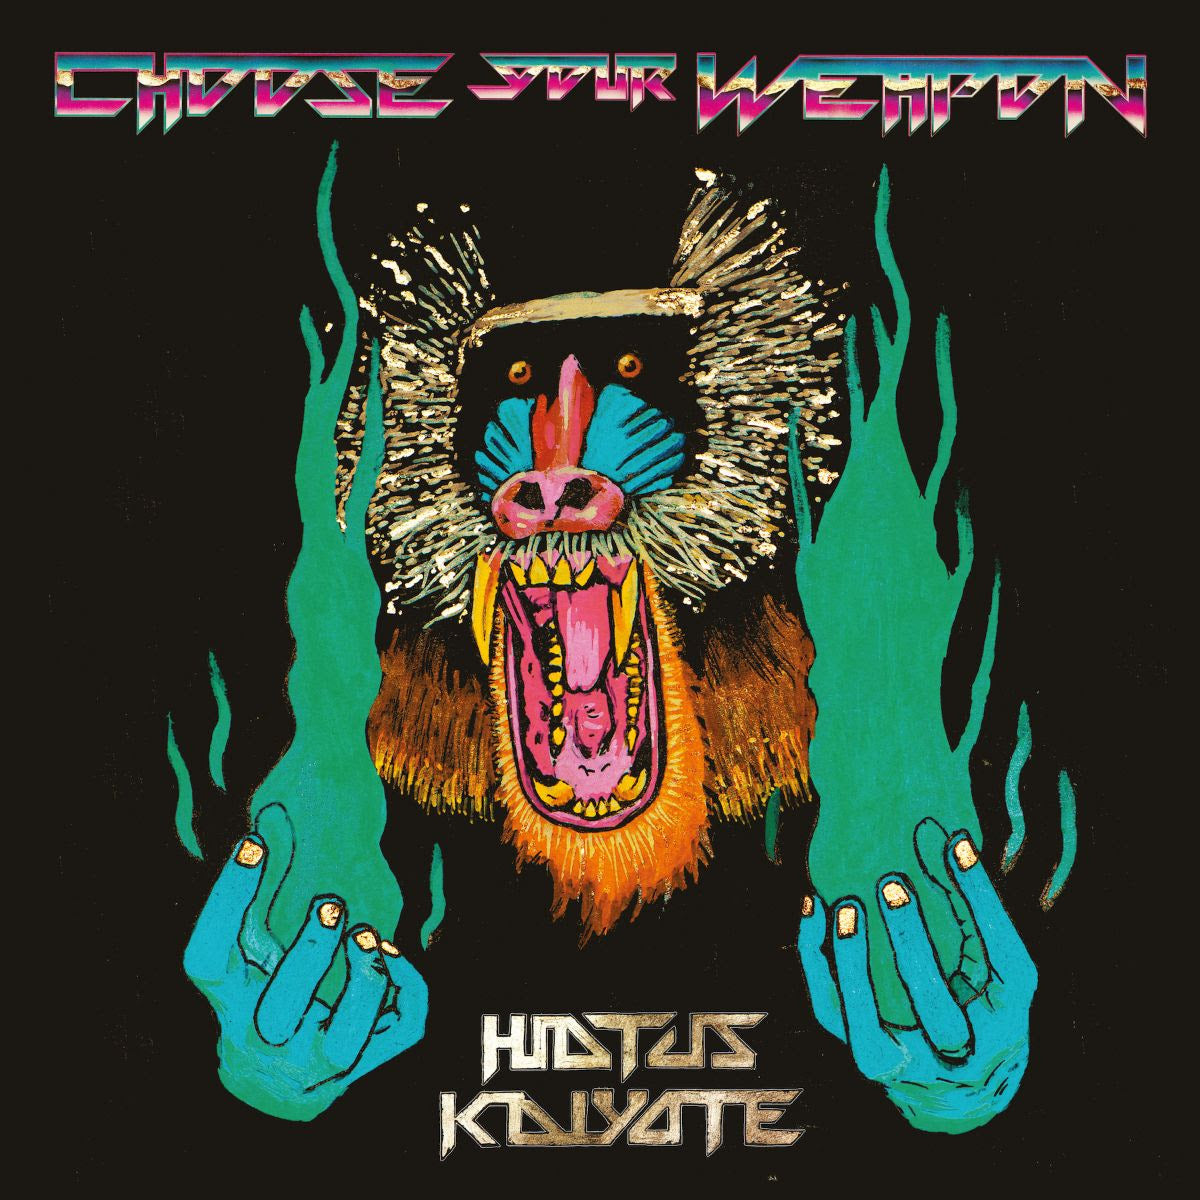  Hiatus Kaiyote - Choose Your Weapon | Buy the Vinyl LP from Flying Nun Records